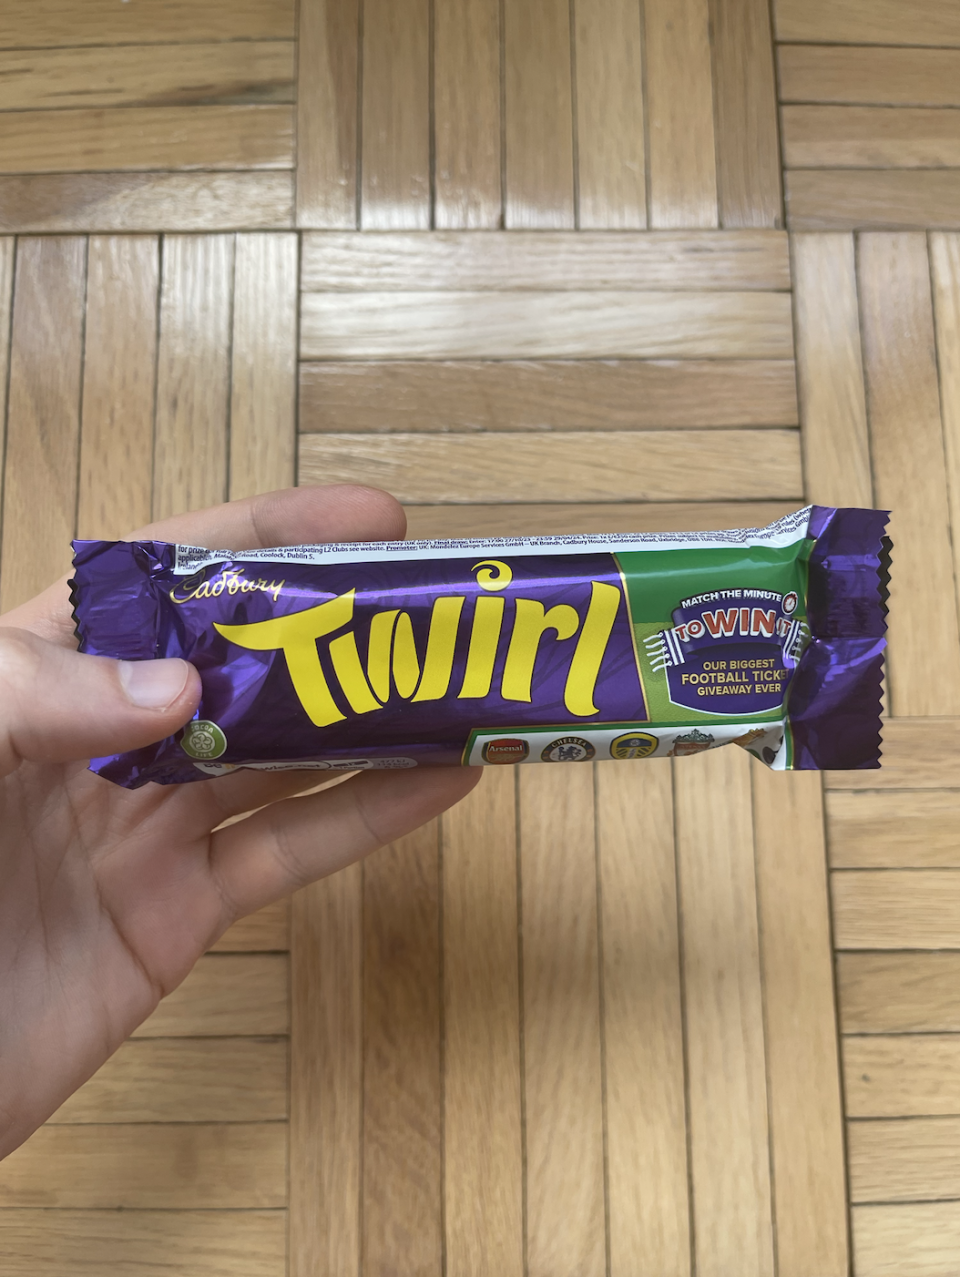 Hand holding a Cadbury Twirl chocolate bar against a wood floor background